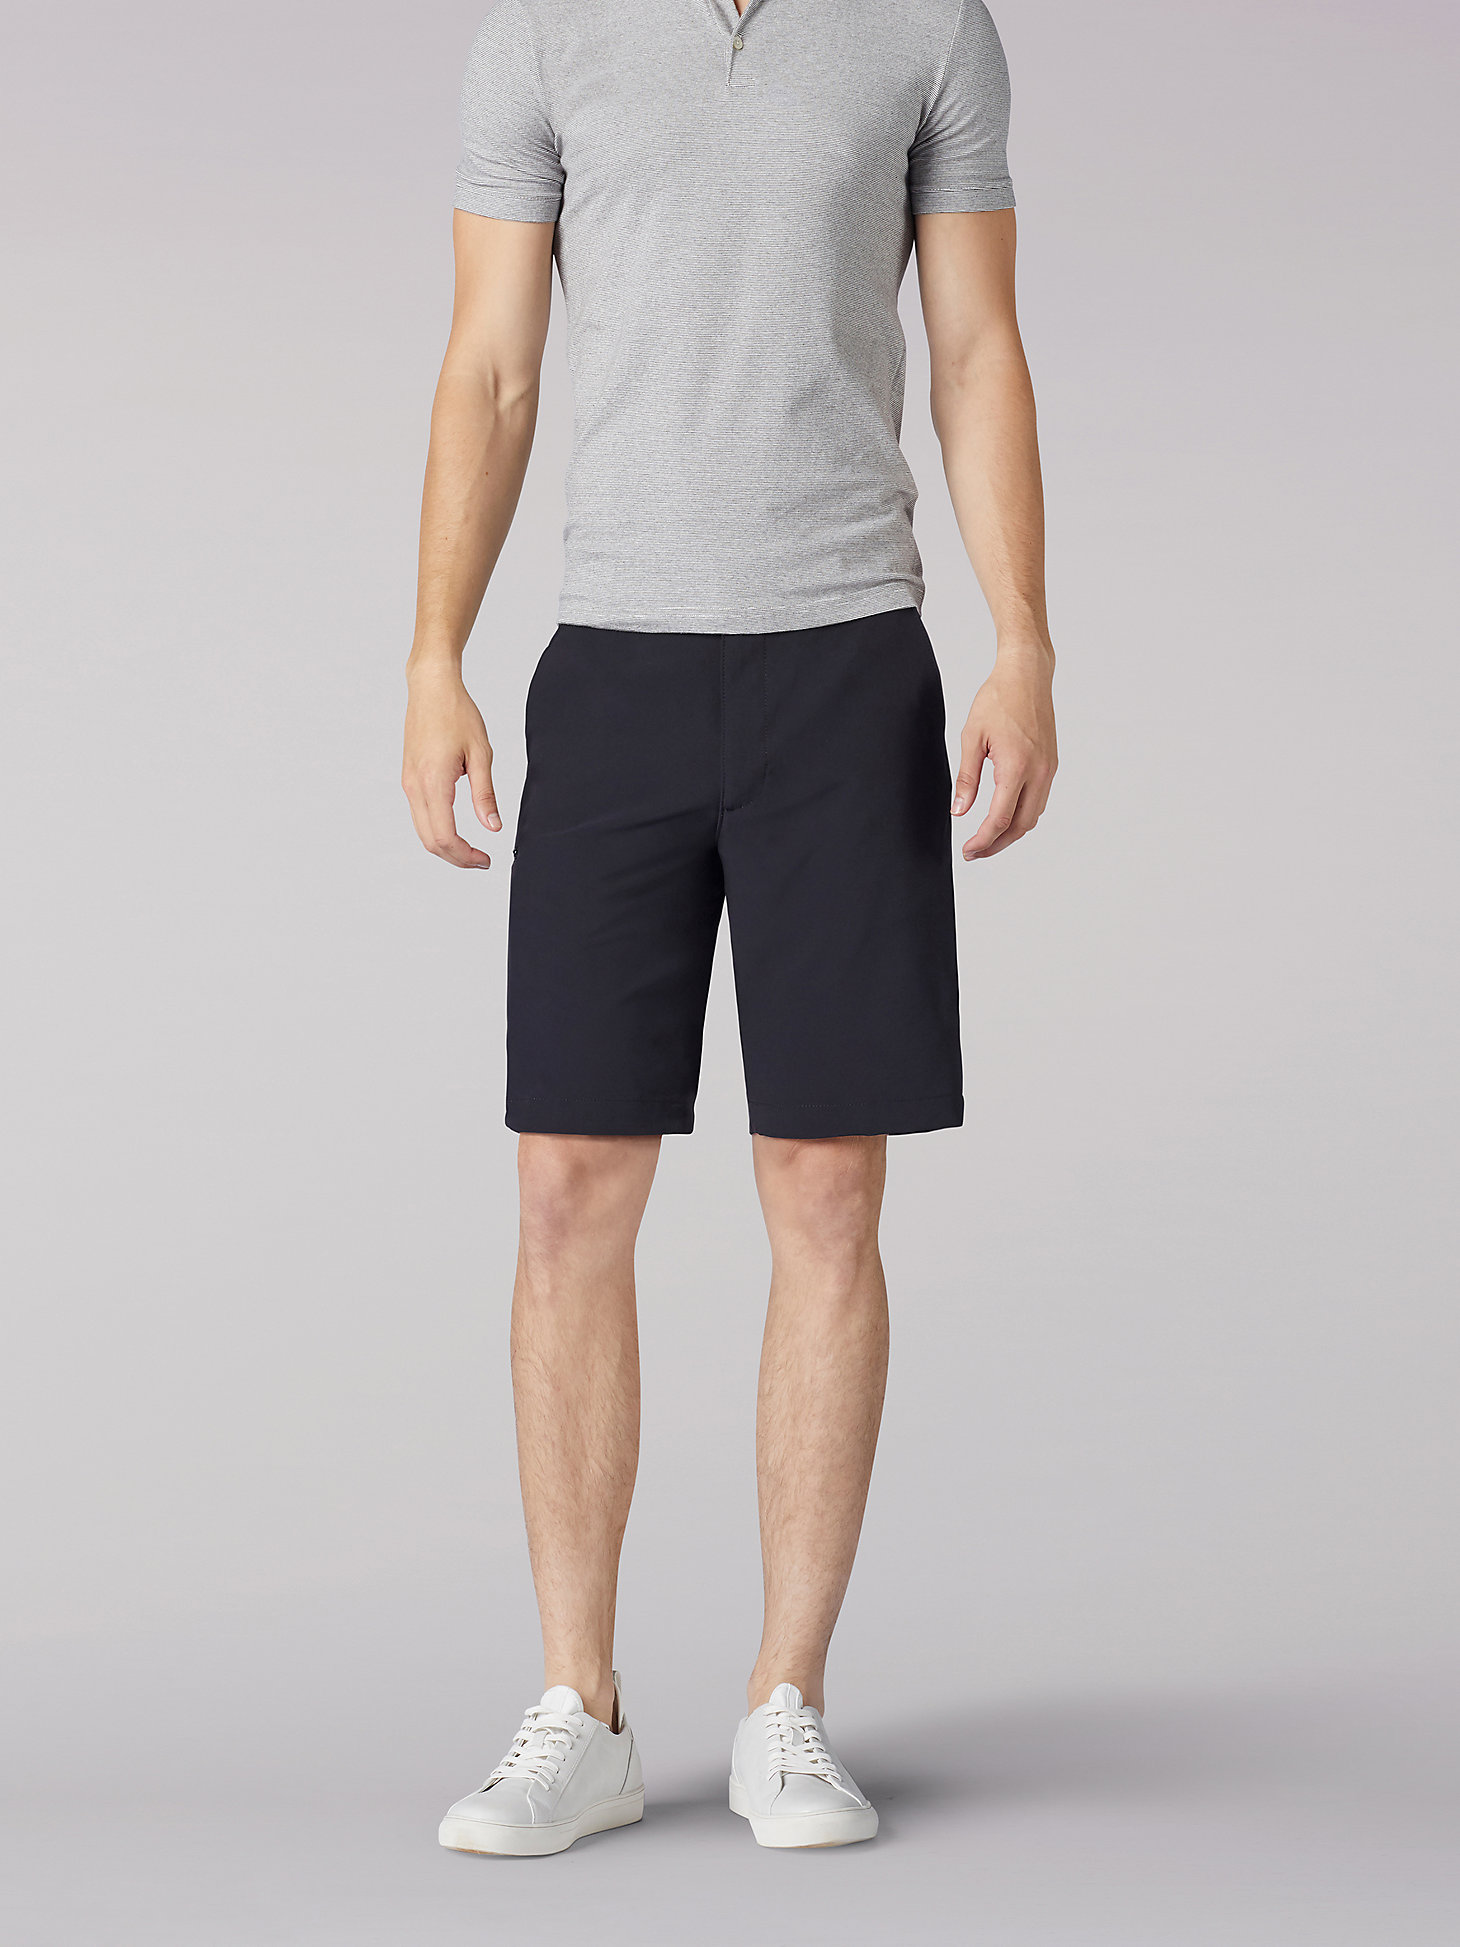 Men’s Tri-Flex Shorts in Black main view